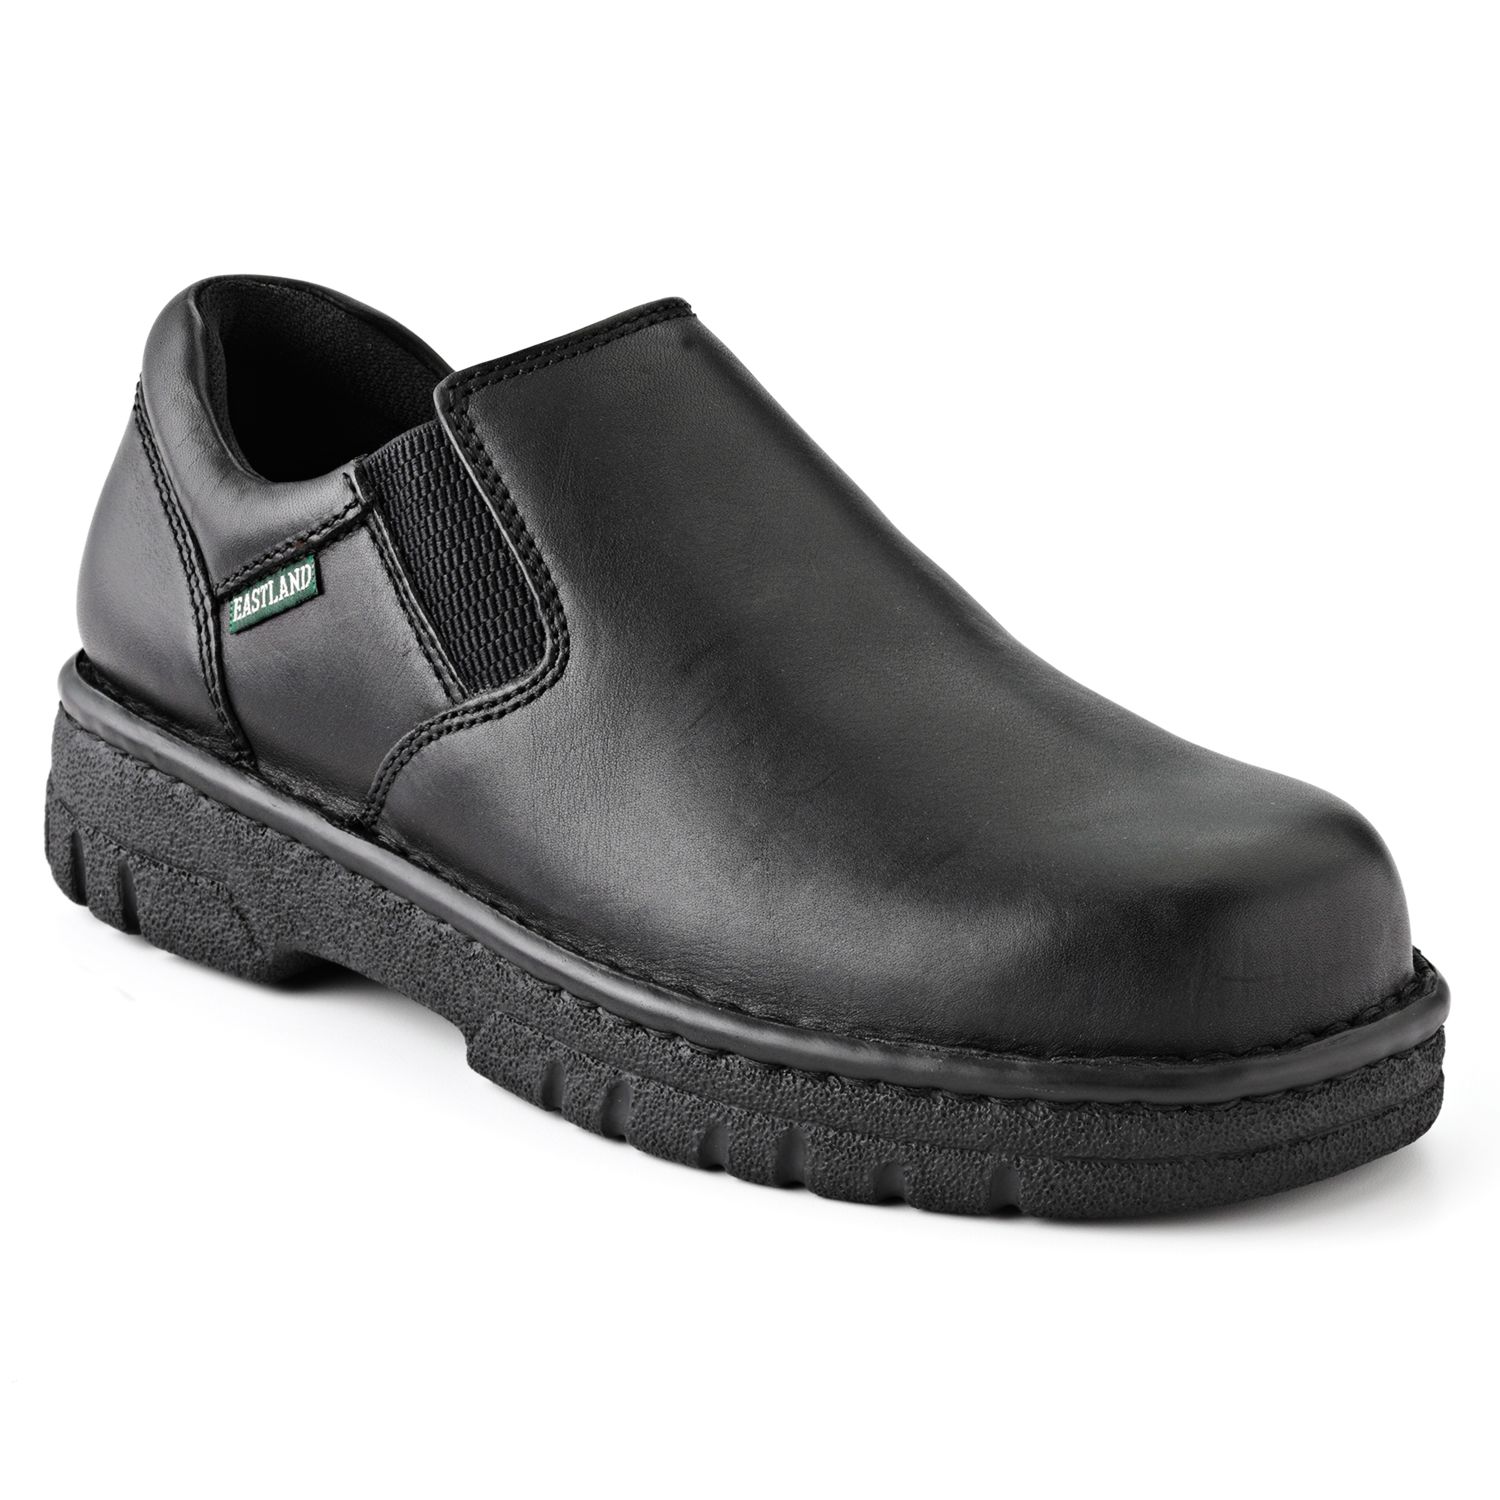 Eastland Newport Men's Slip-On Shoes